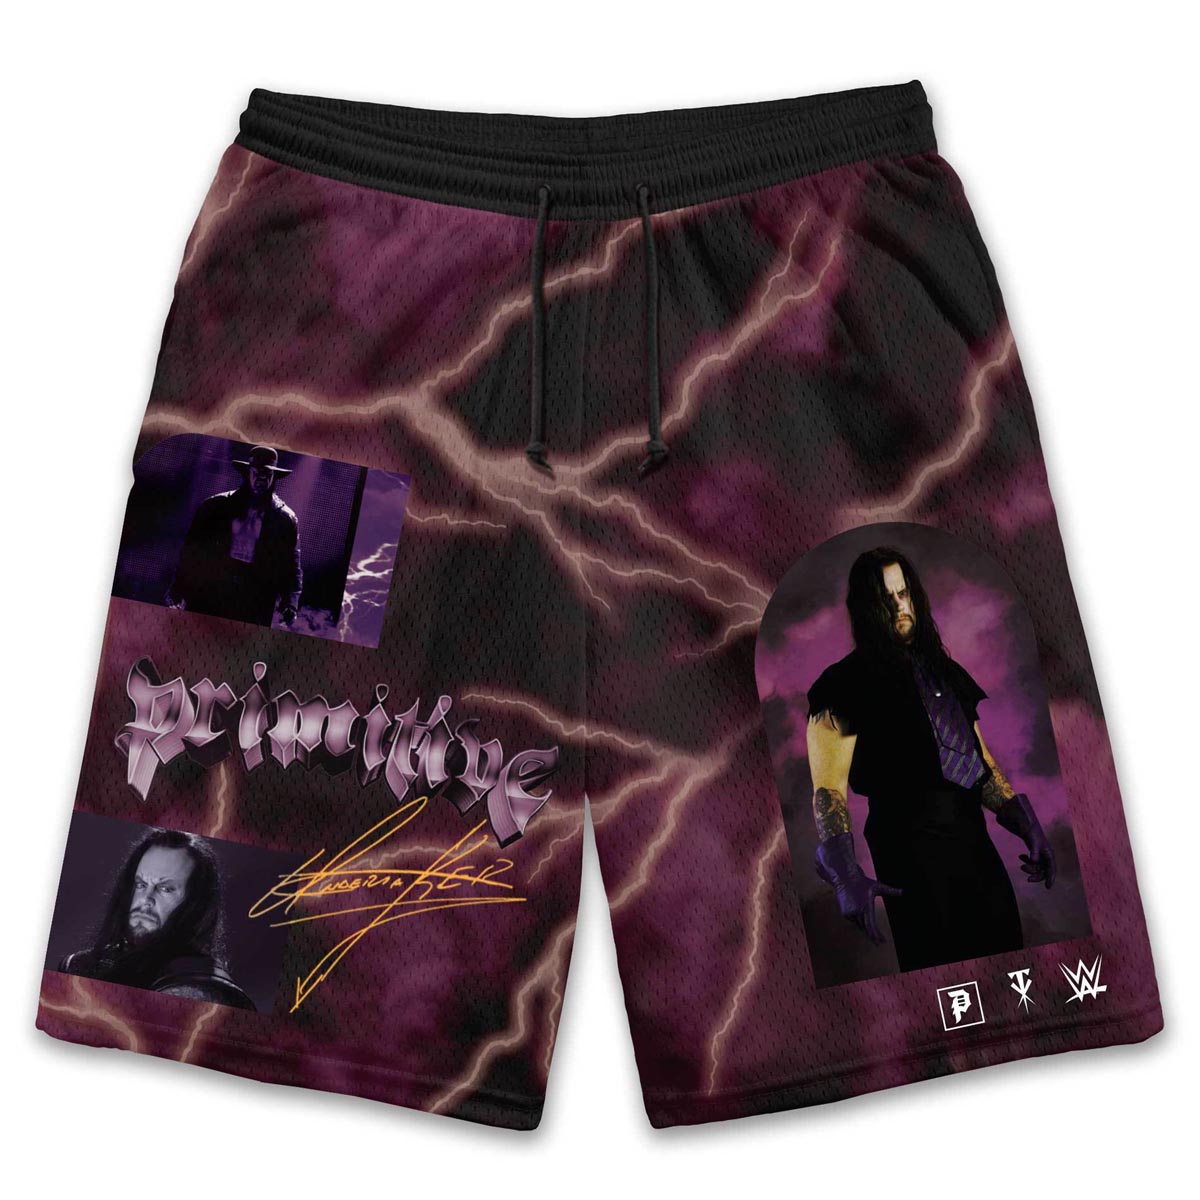 Primitive x WWE Deadman Forever Mesh Shorts - Purple image 1